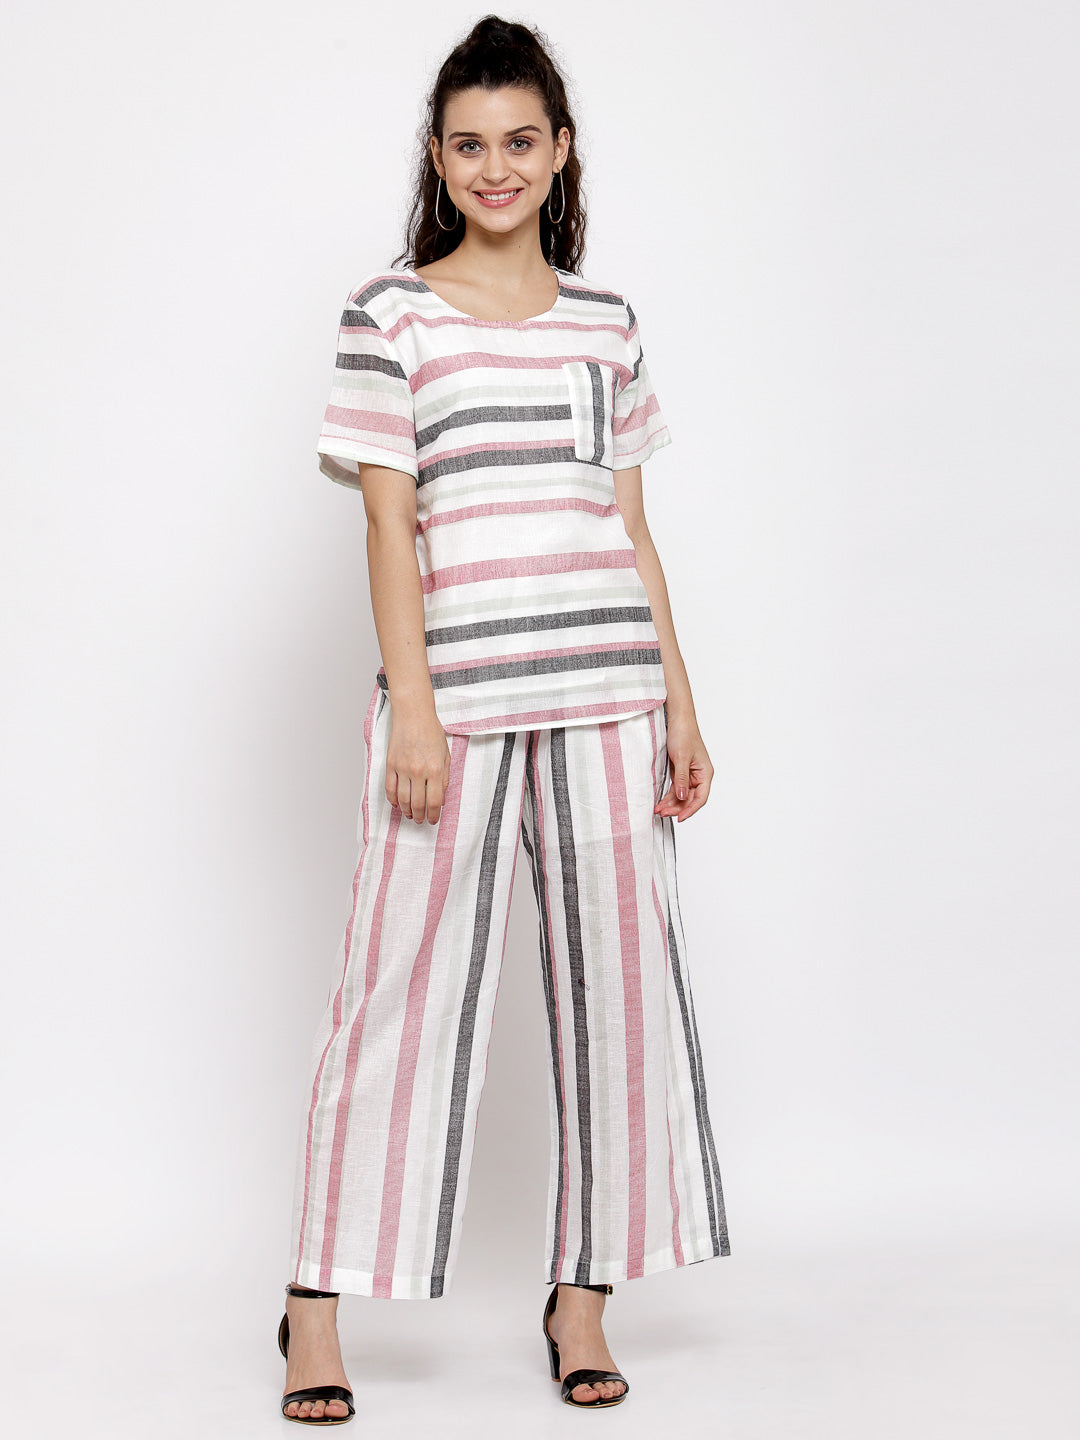 KLOTTHE Multicolor Stripe Printed A- Line Dress with Bottom